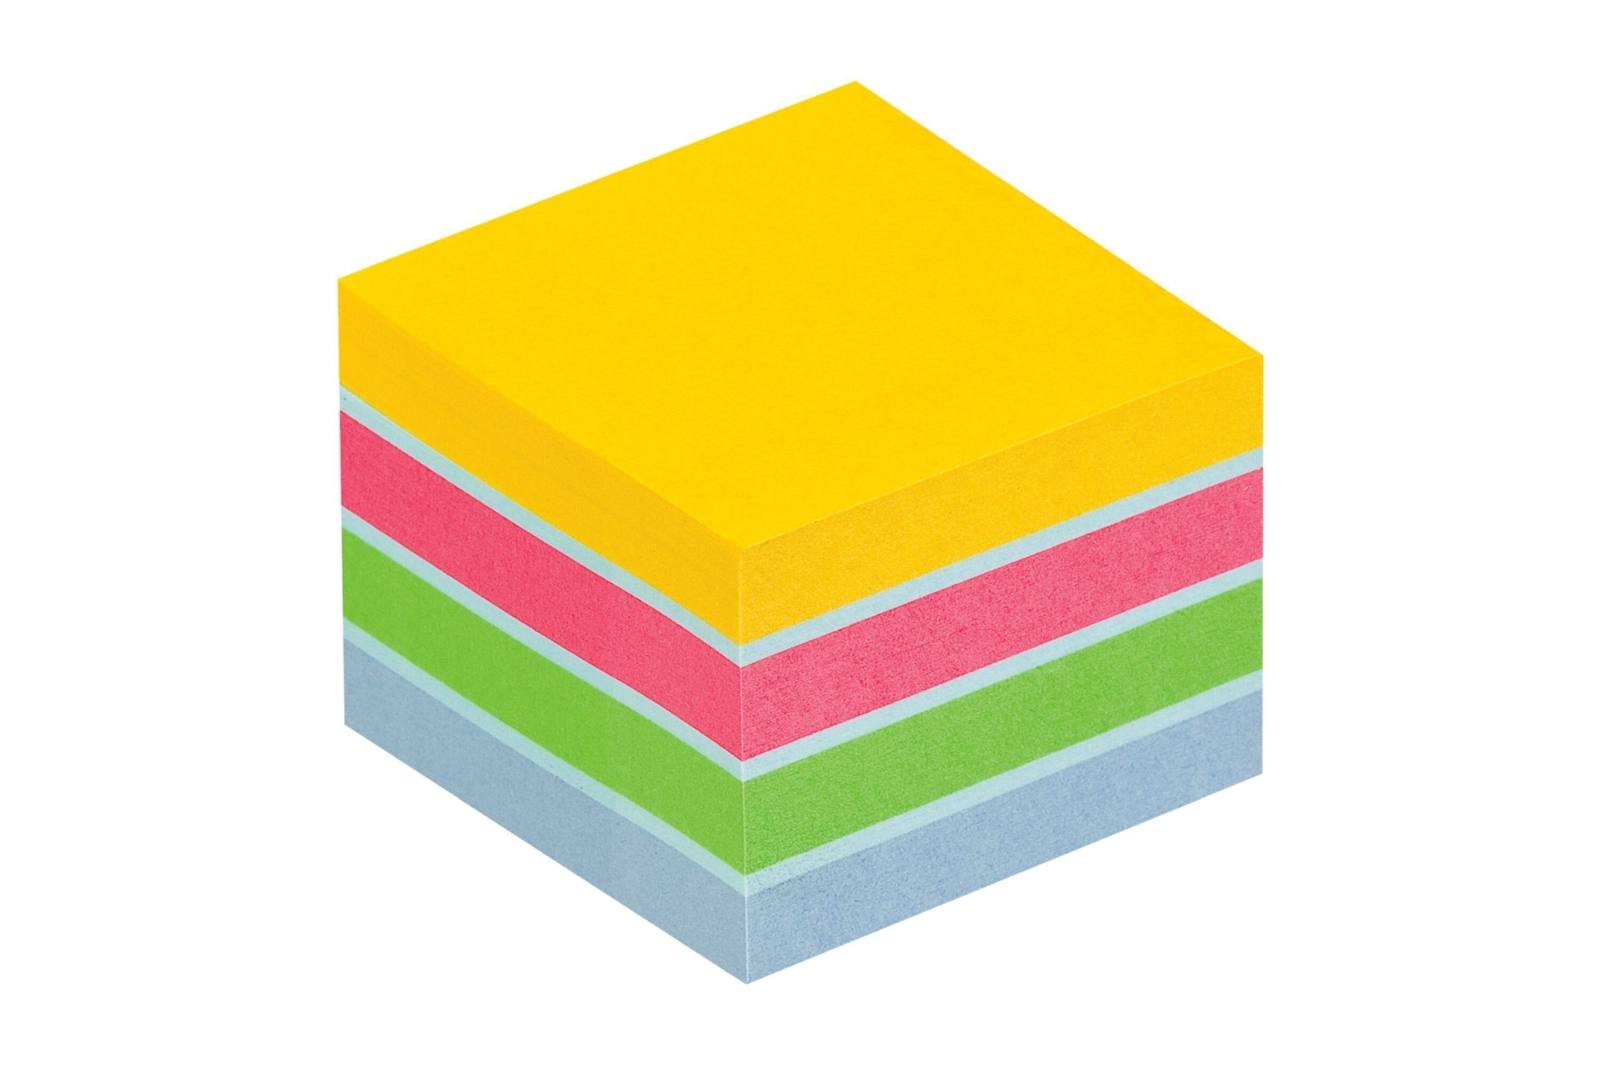 3M Post-it Mini cube 2012MUC, 51 x 51 mm, ultra blue, ultra yellow, ultra green, ultra pink, 1 cube with 400 sheets each